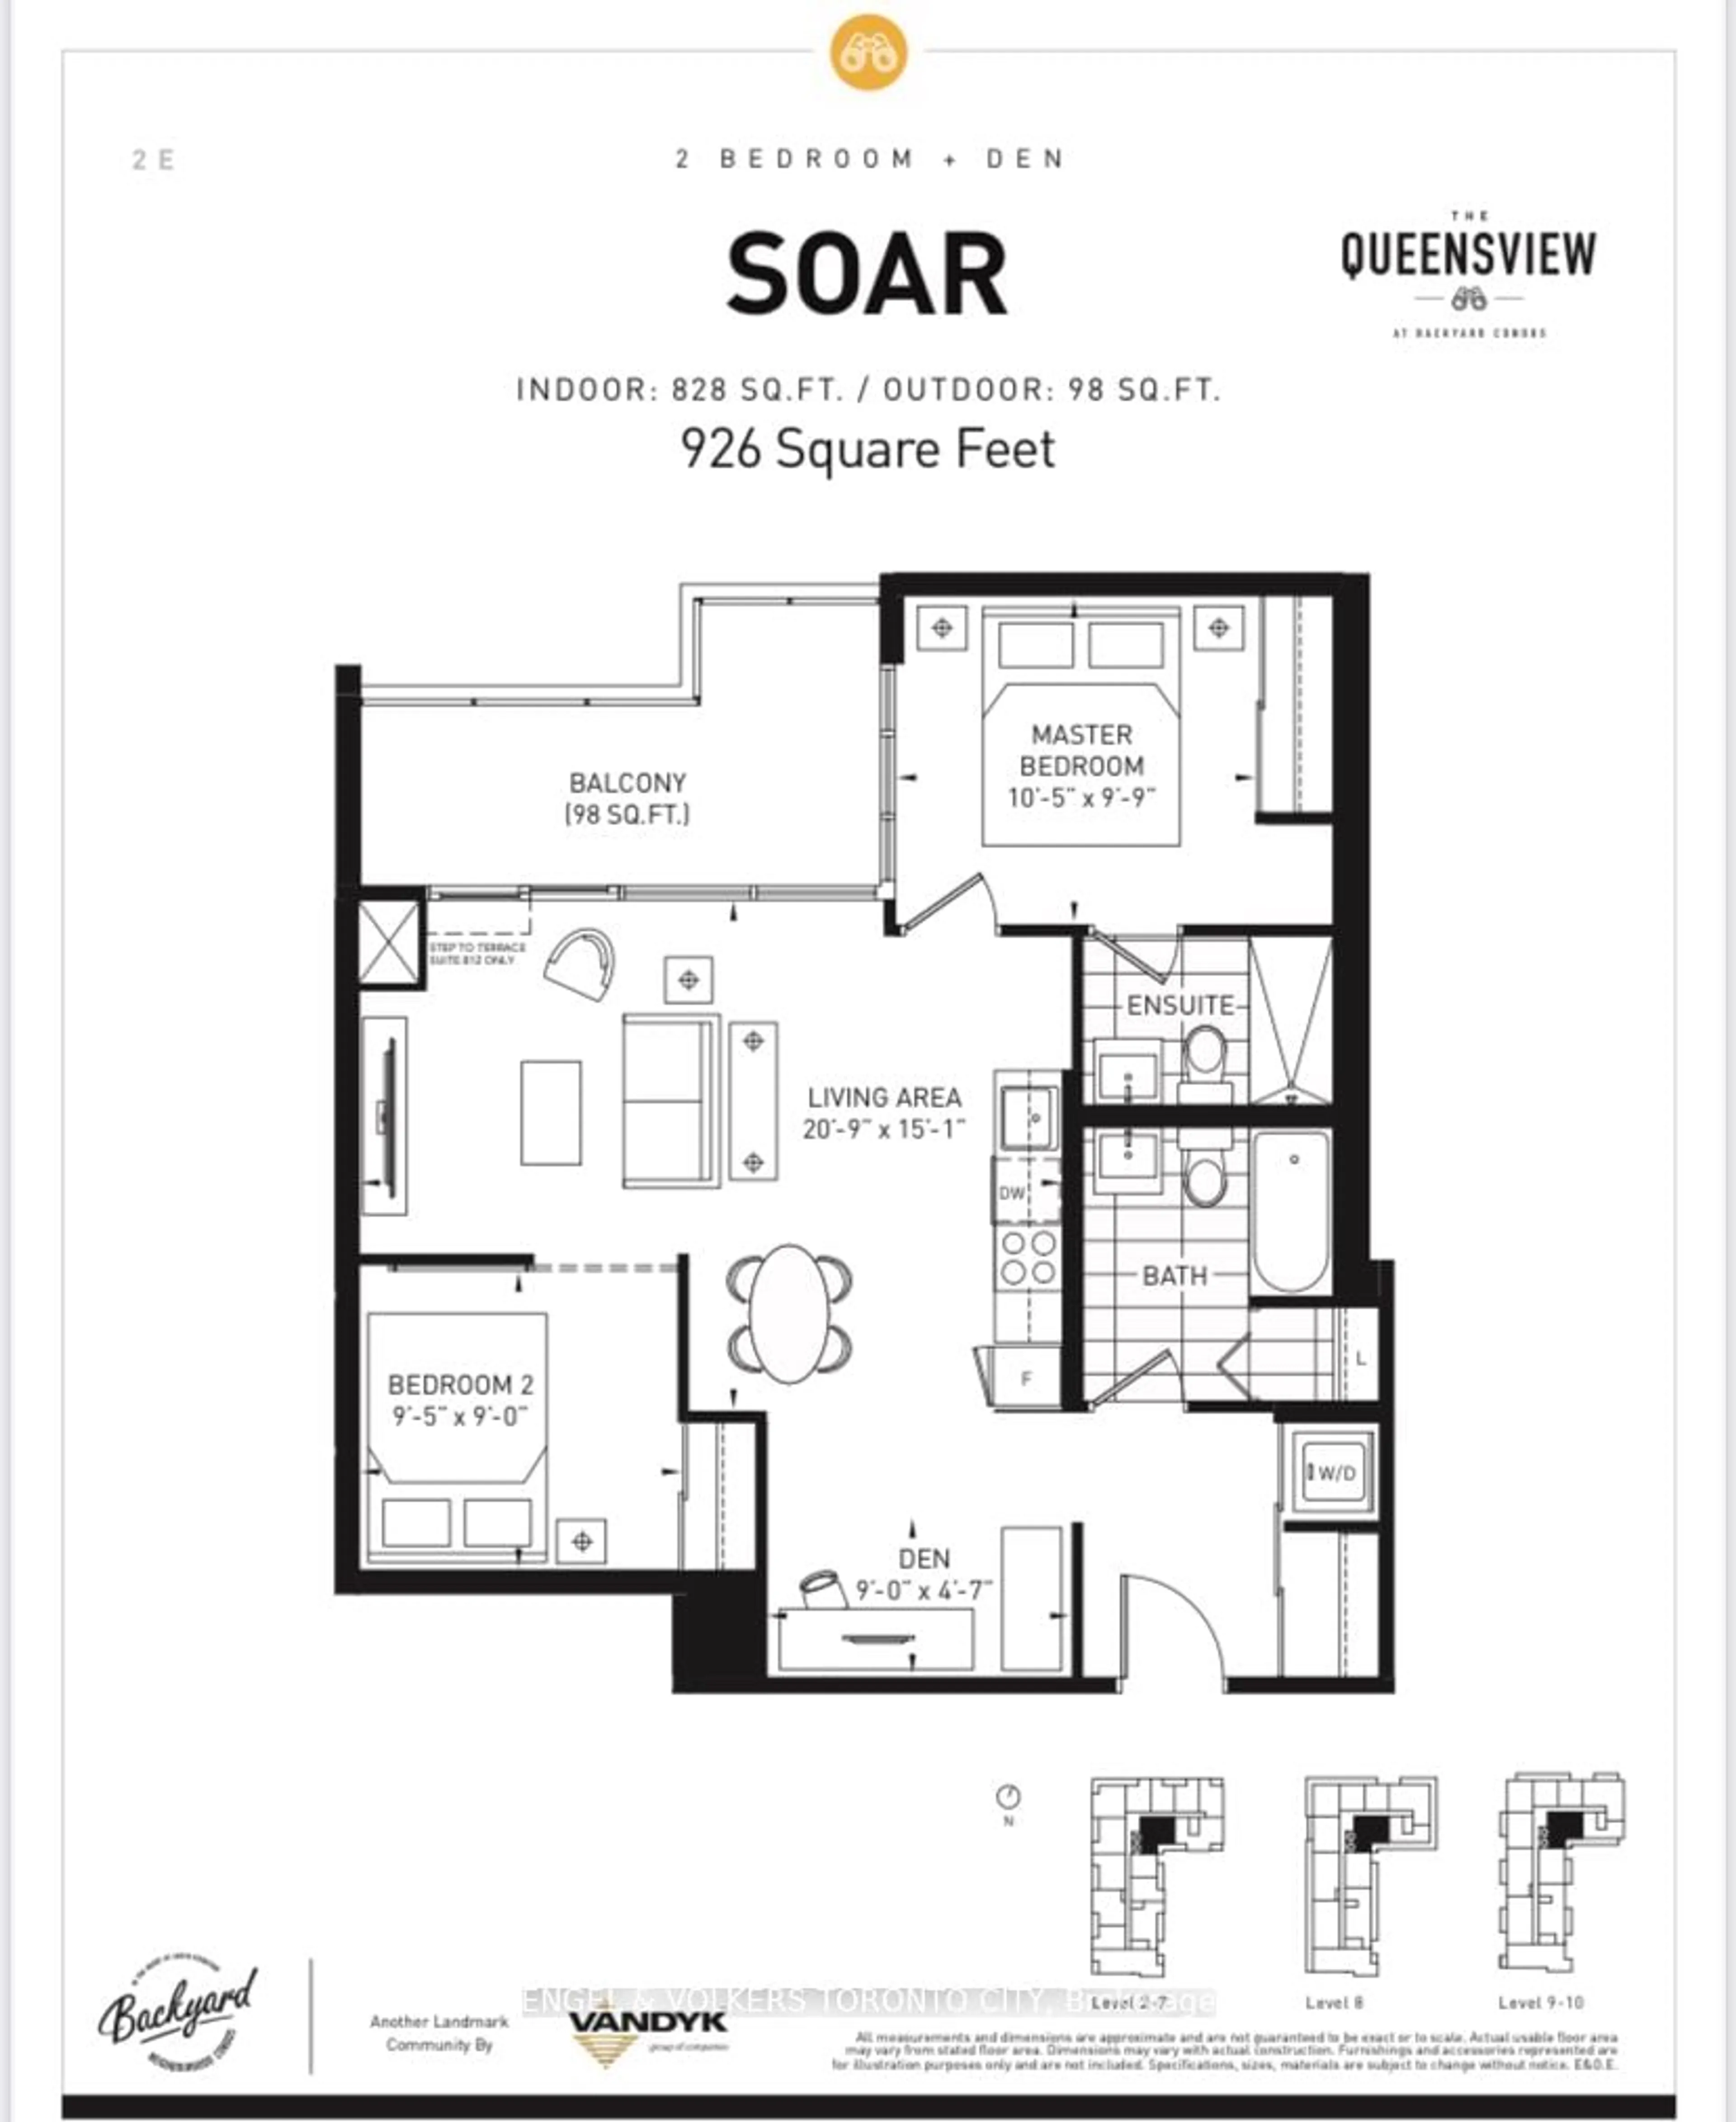 Floor plan for 25 Neighbourhood Lane #1012, Toronto Ontario M8Y 0C4